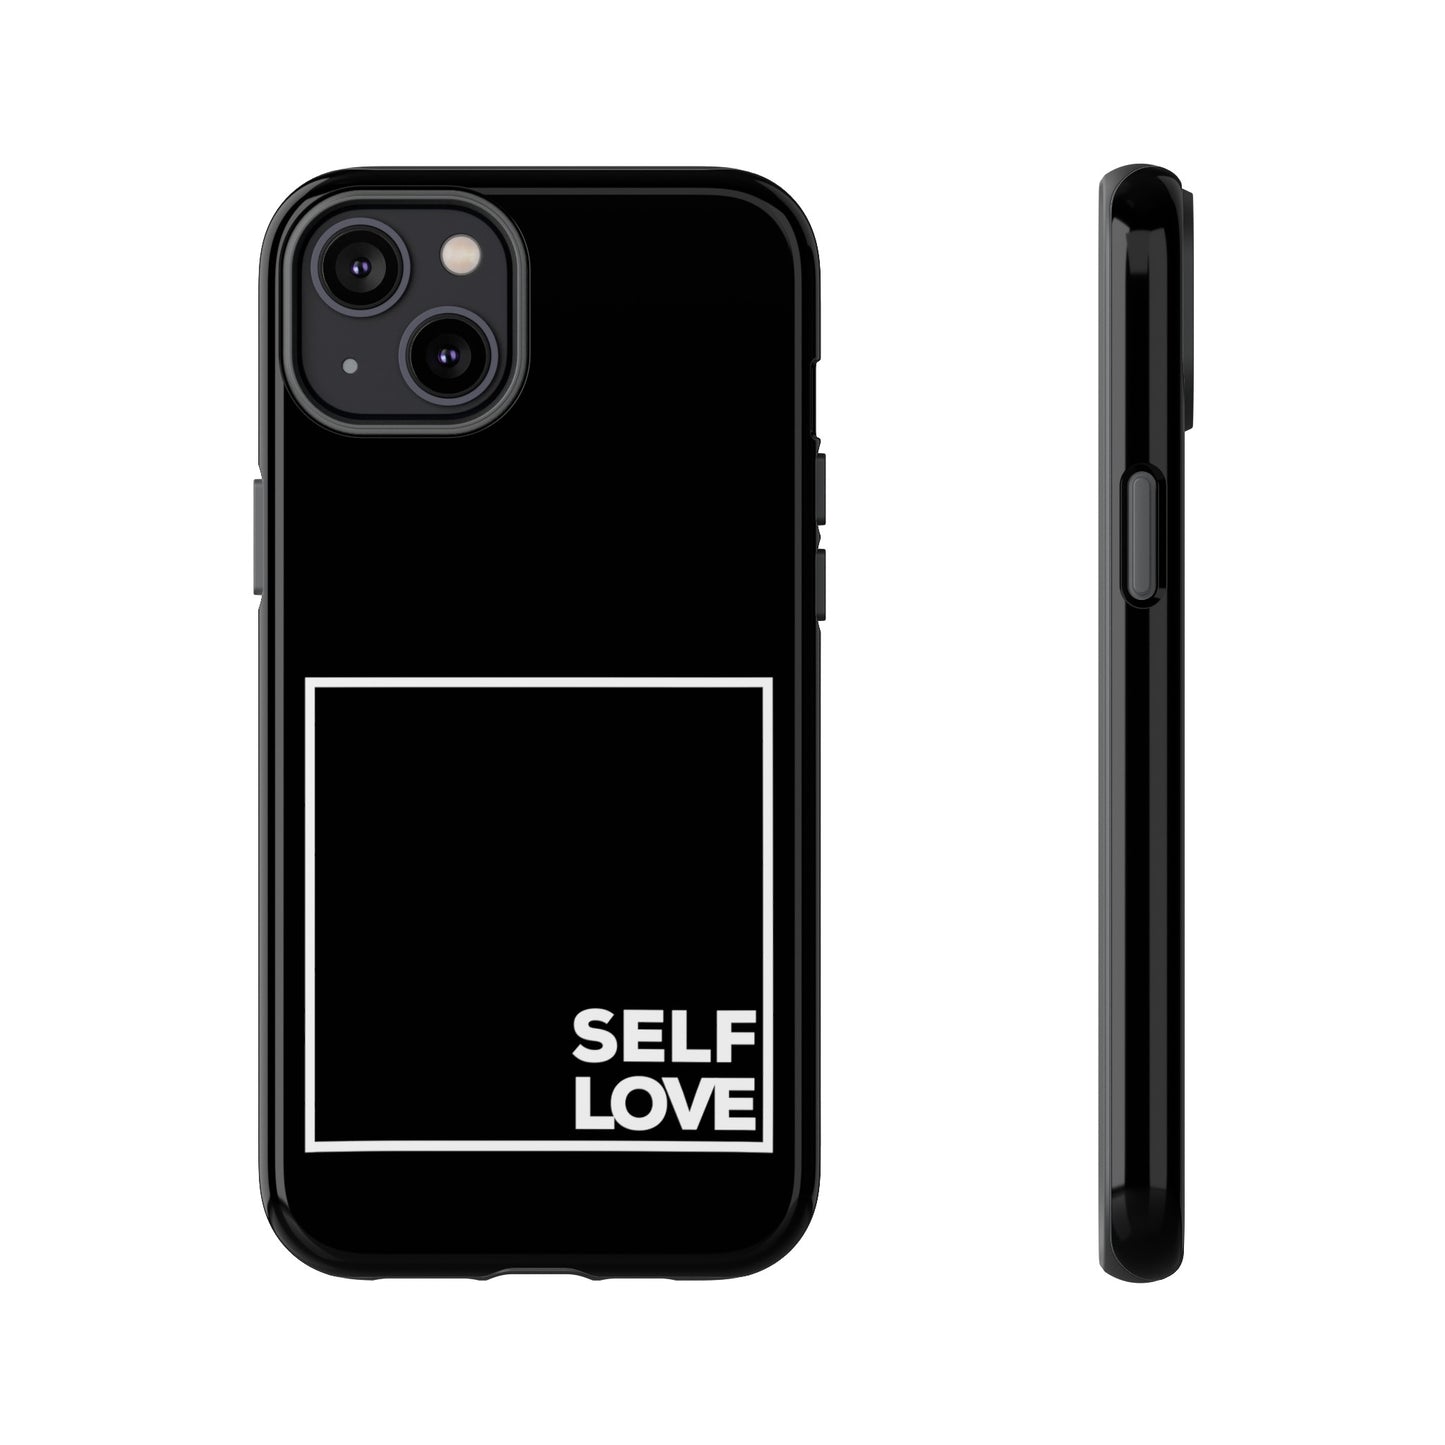 Self Love (Black)